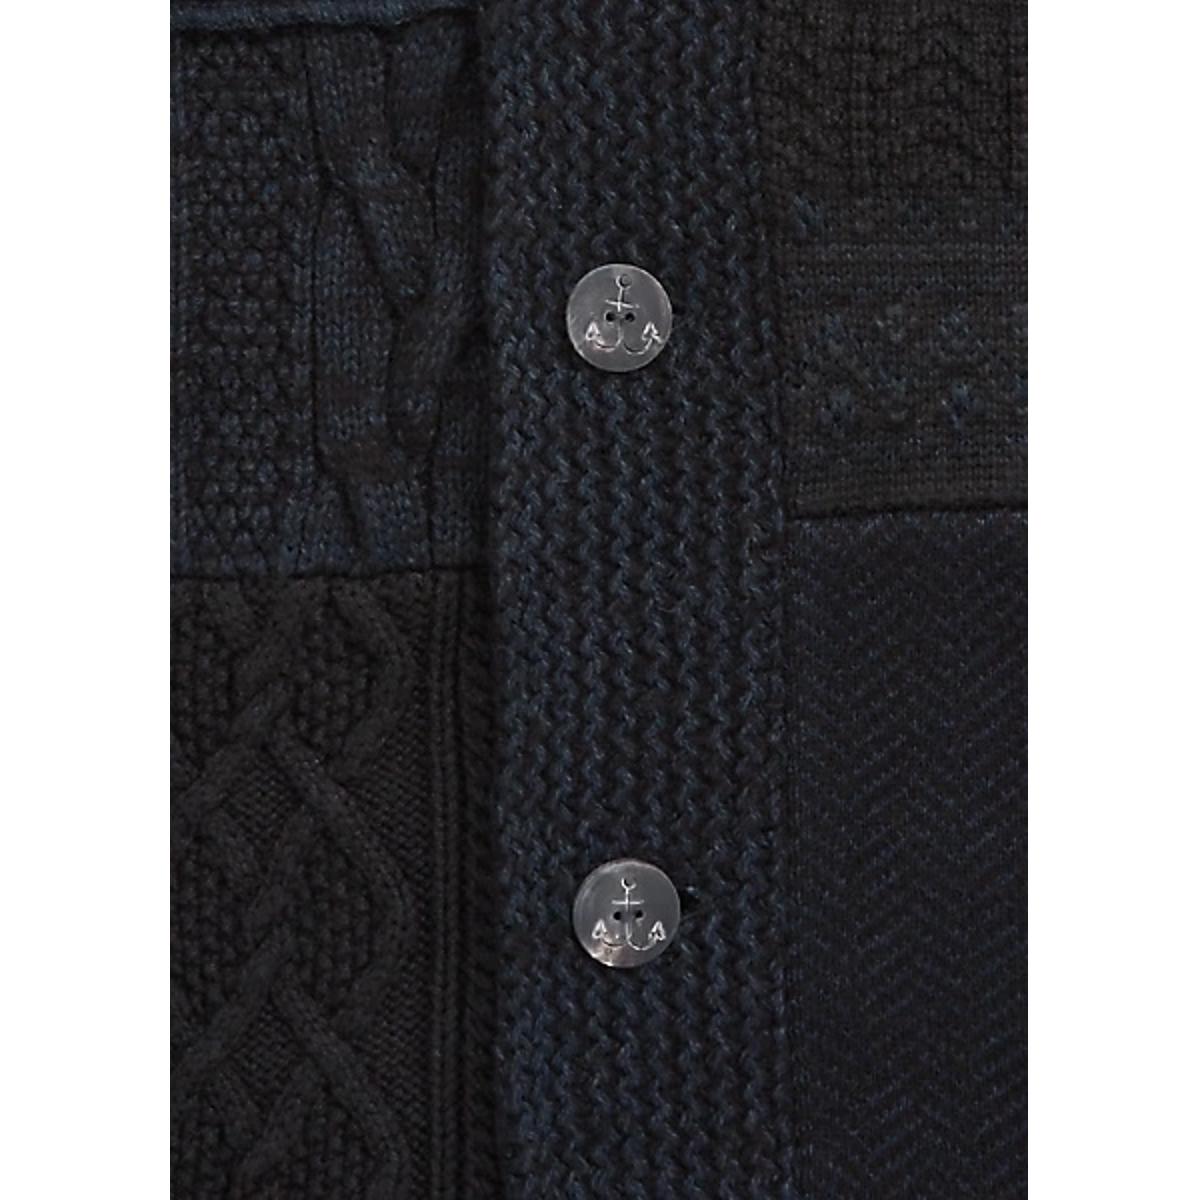 Indigo Patchwork Cotton-Wool Cardigan Black - Sweater